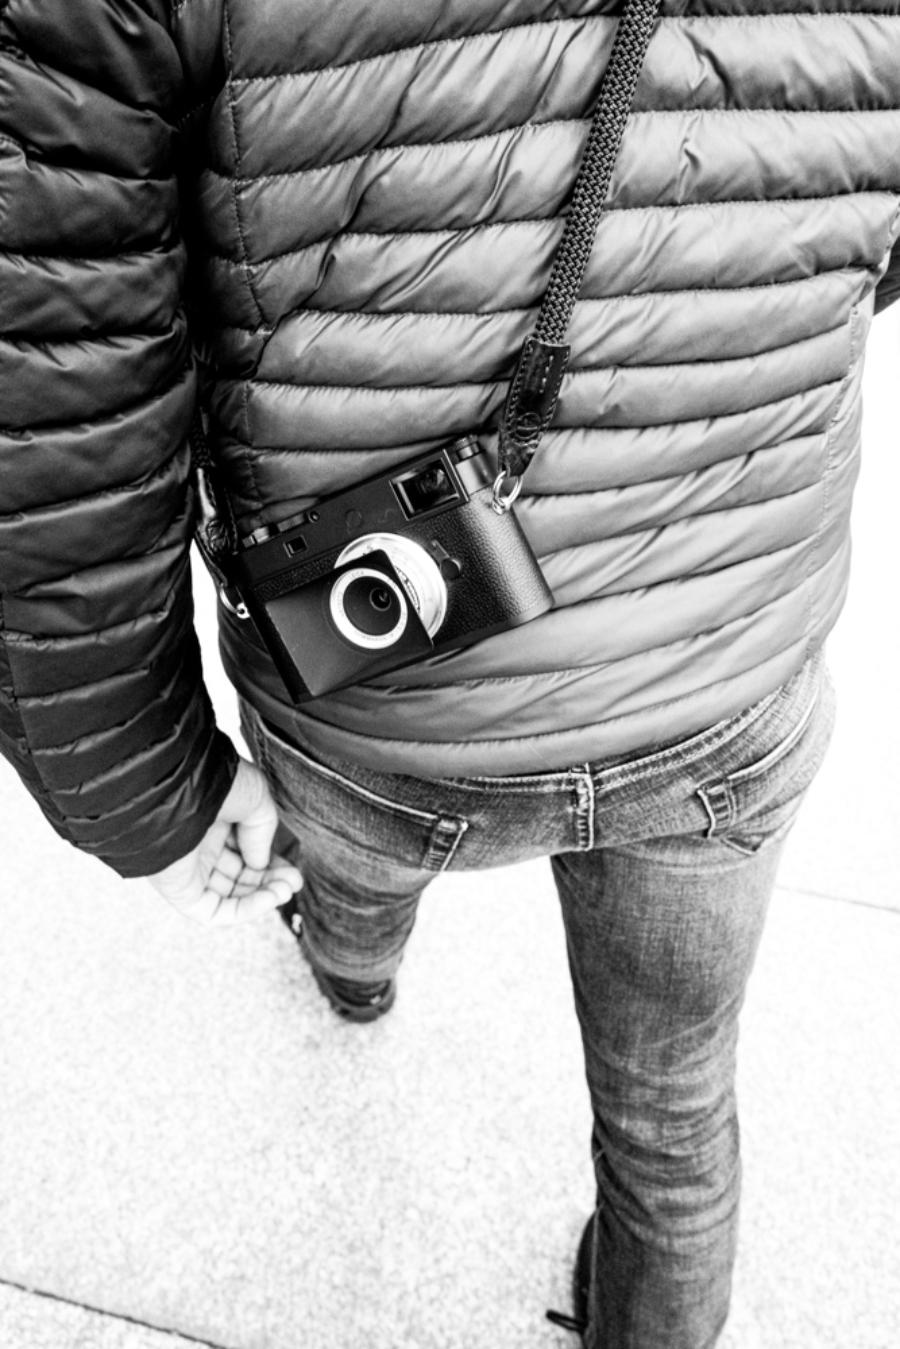 Leica Street Fotograf unterwegs